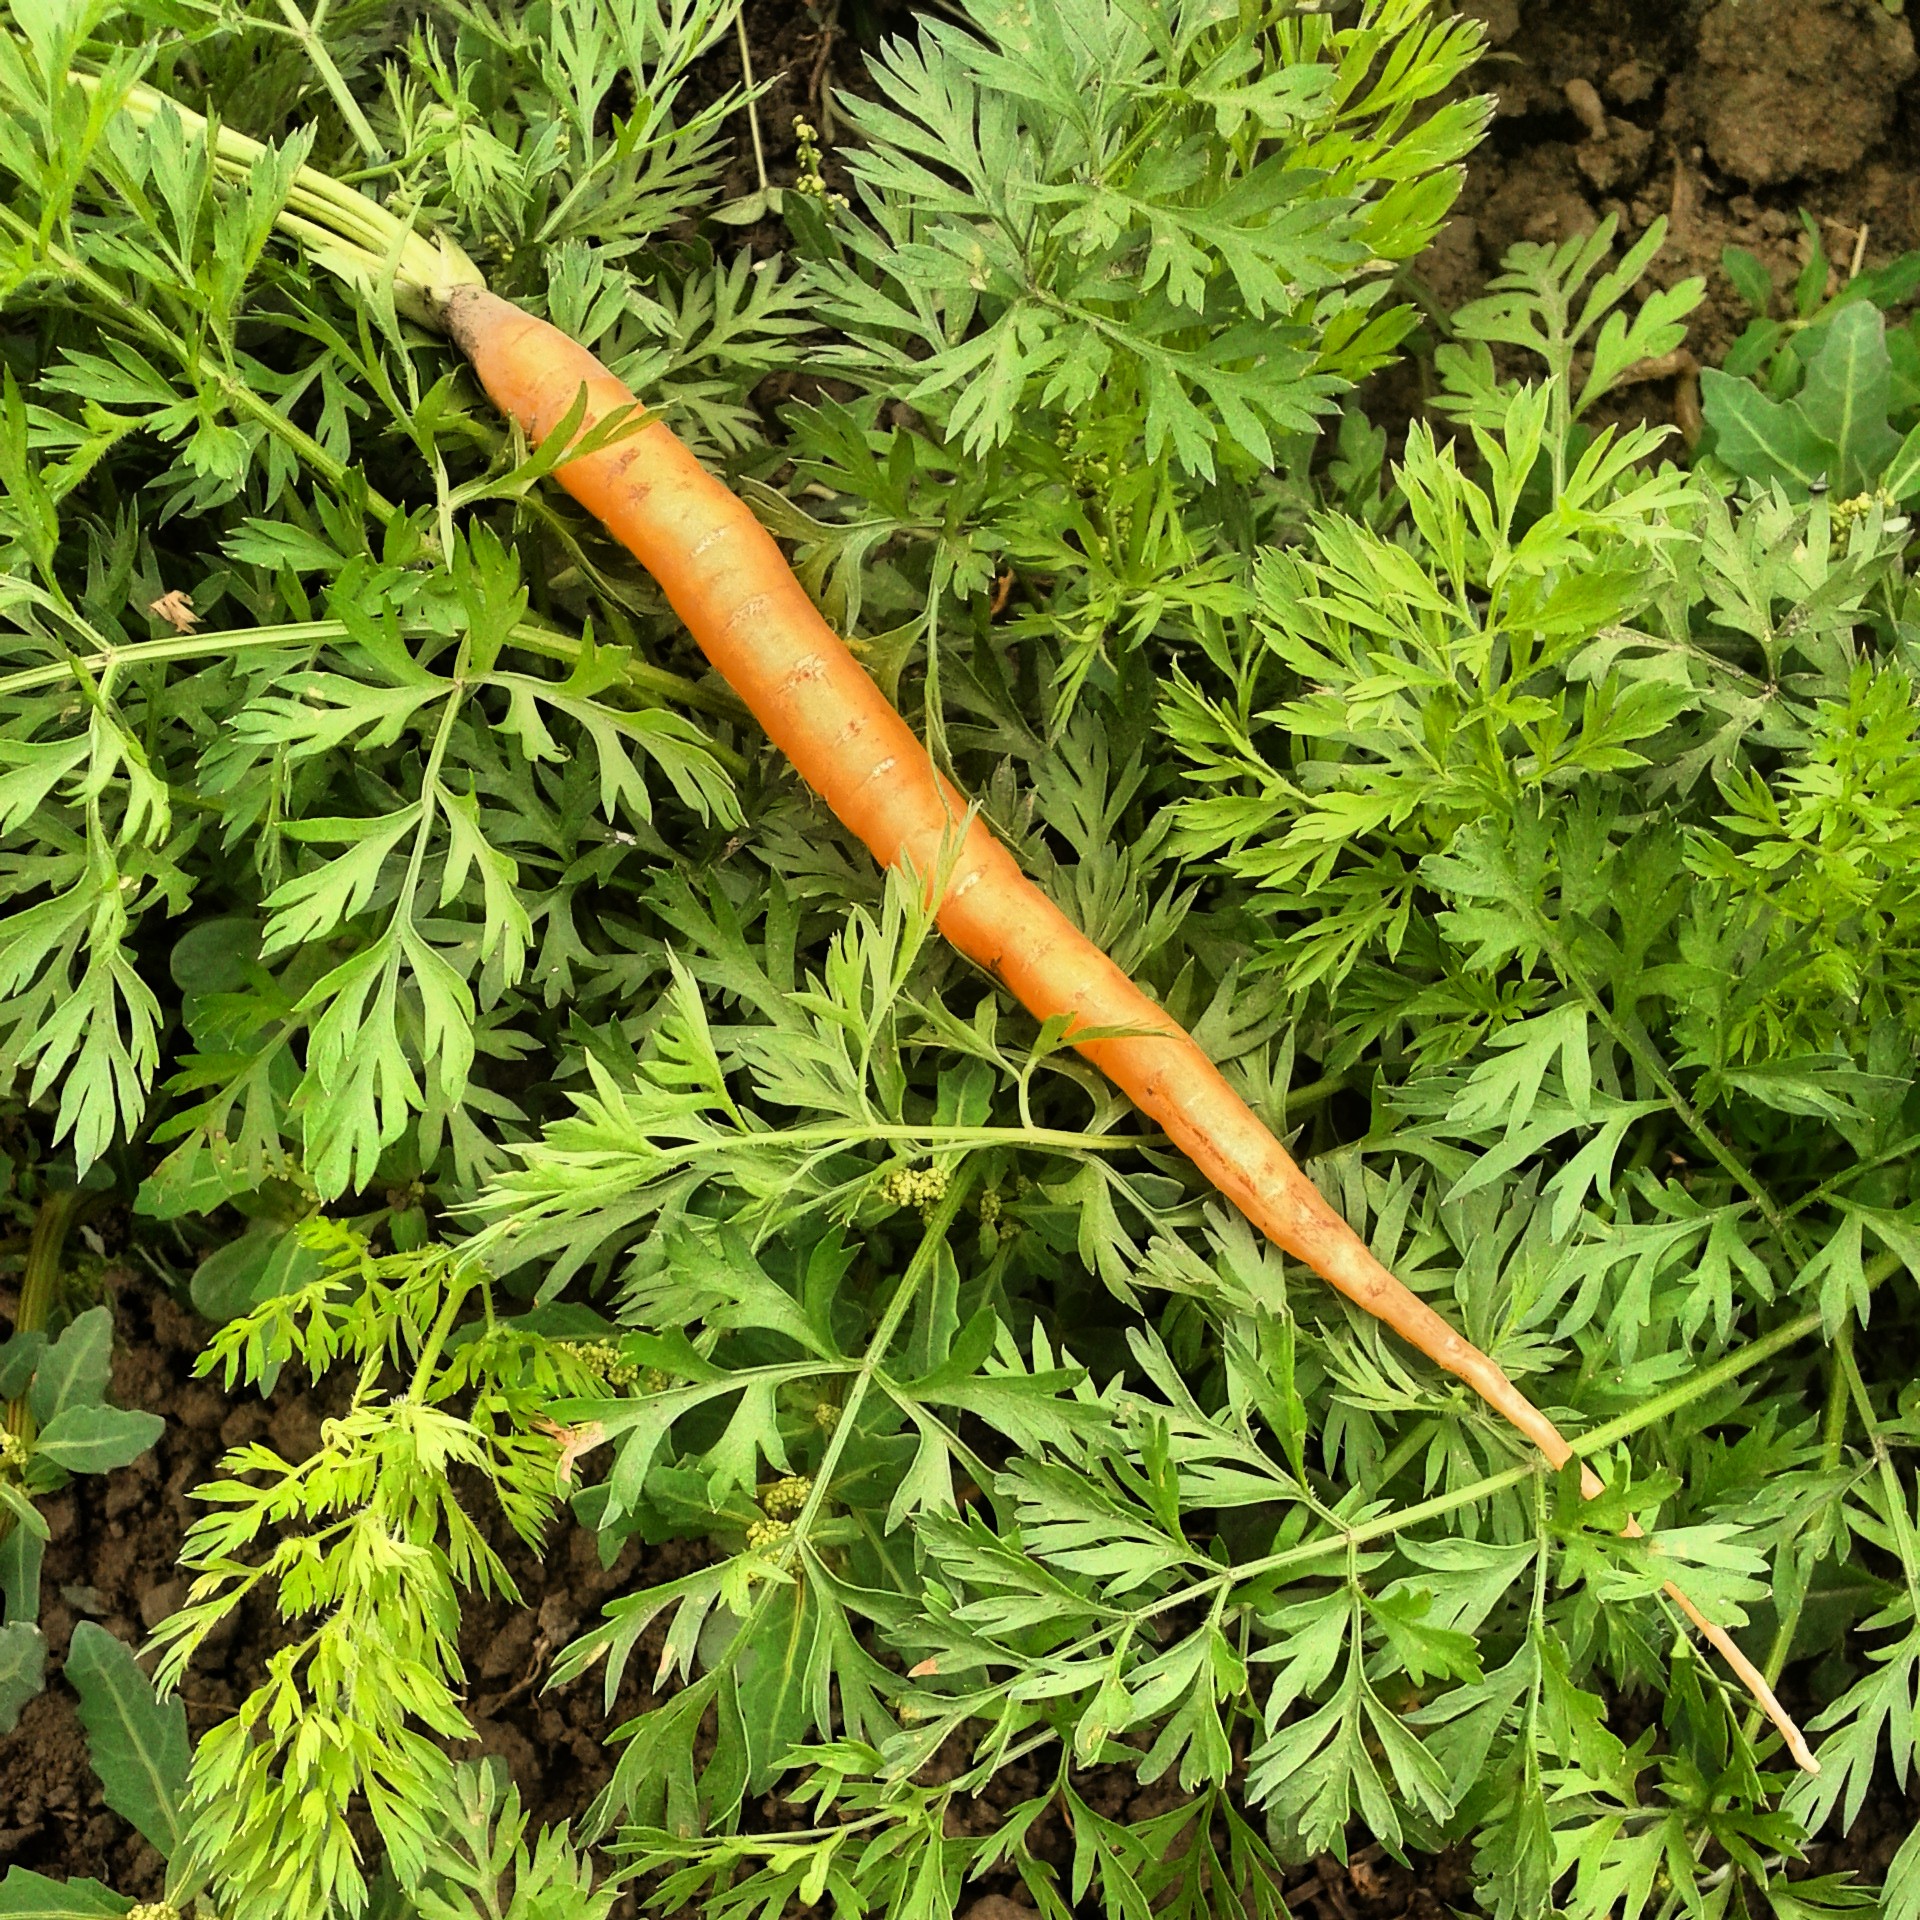 Sprint carrot